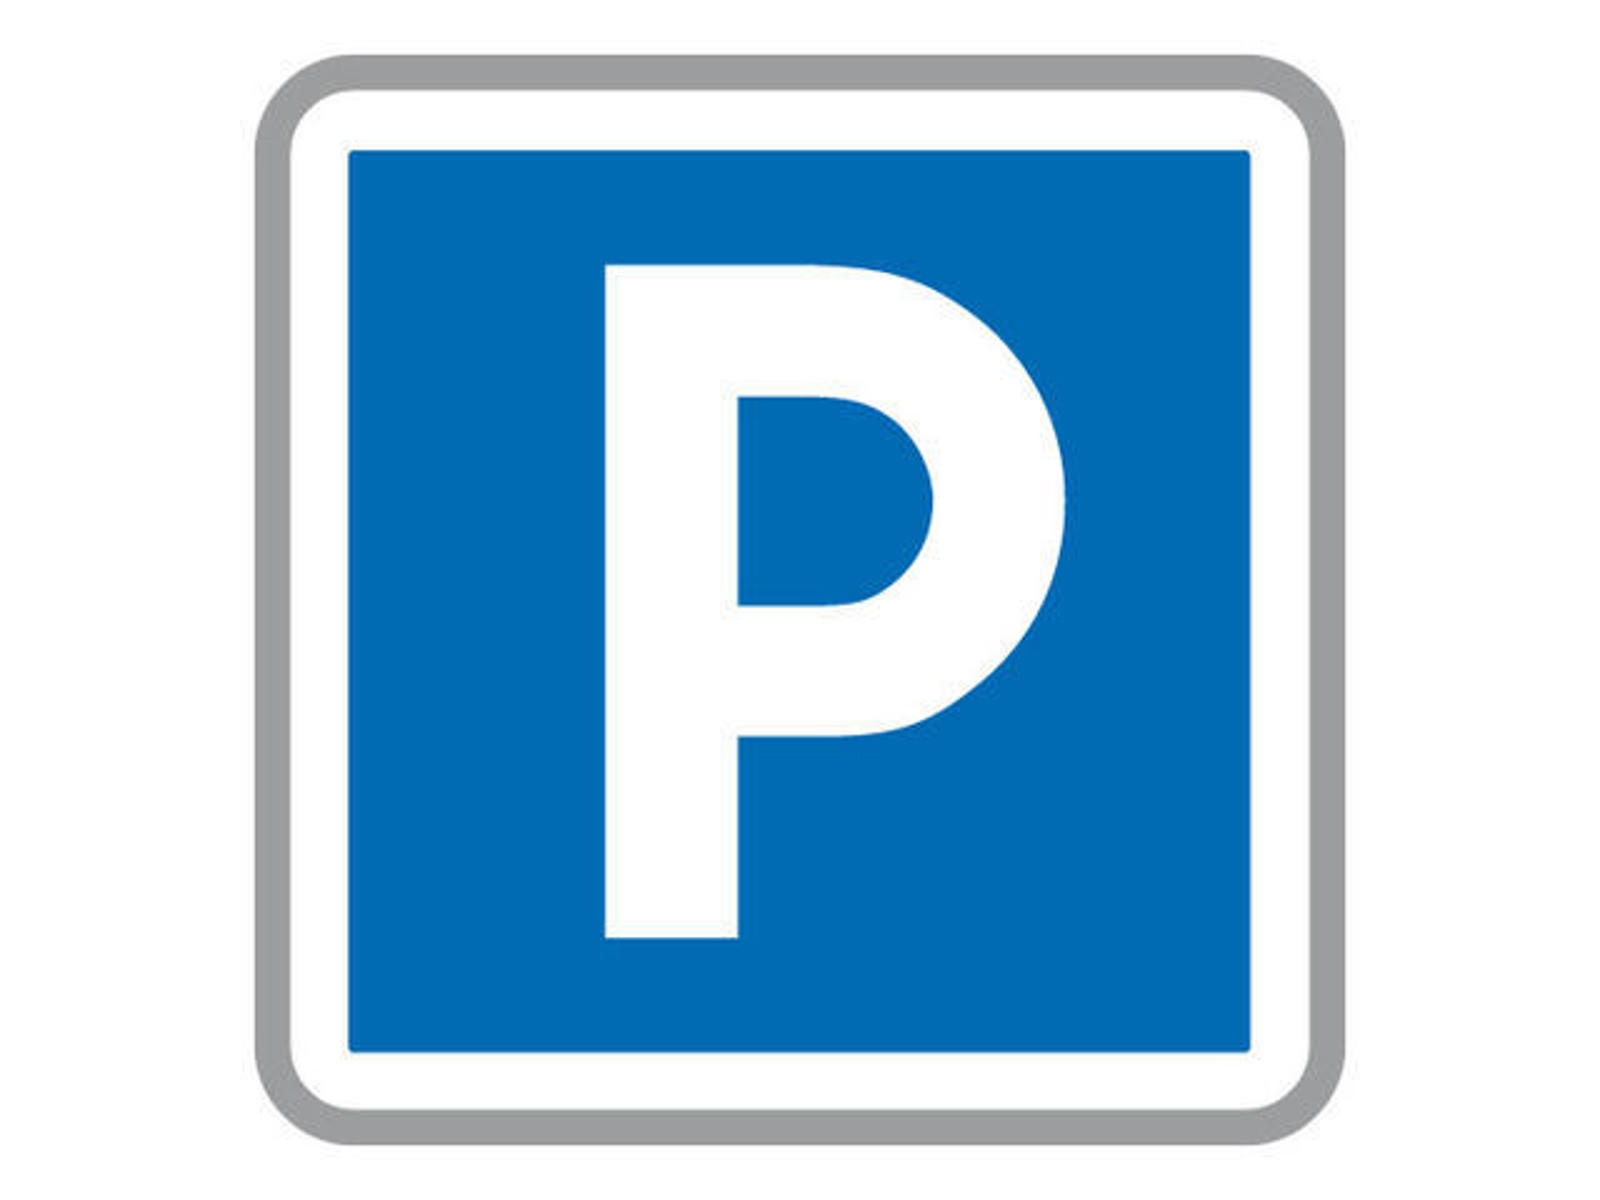 Parking te  koop in Sint-Lambrechts-Woluwe 1200 19000.00€  slaapkamers m² - Zoekertje 1365866